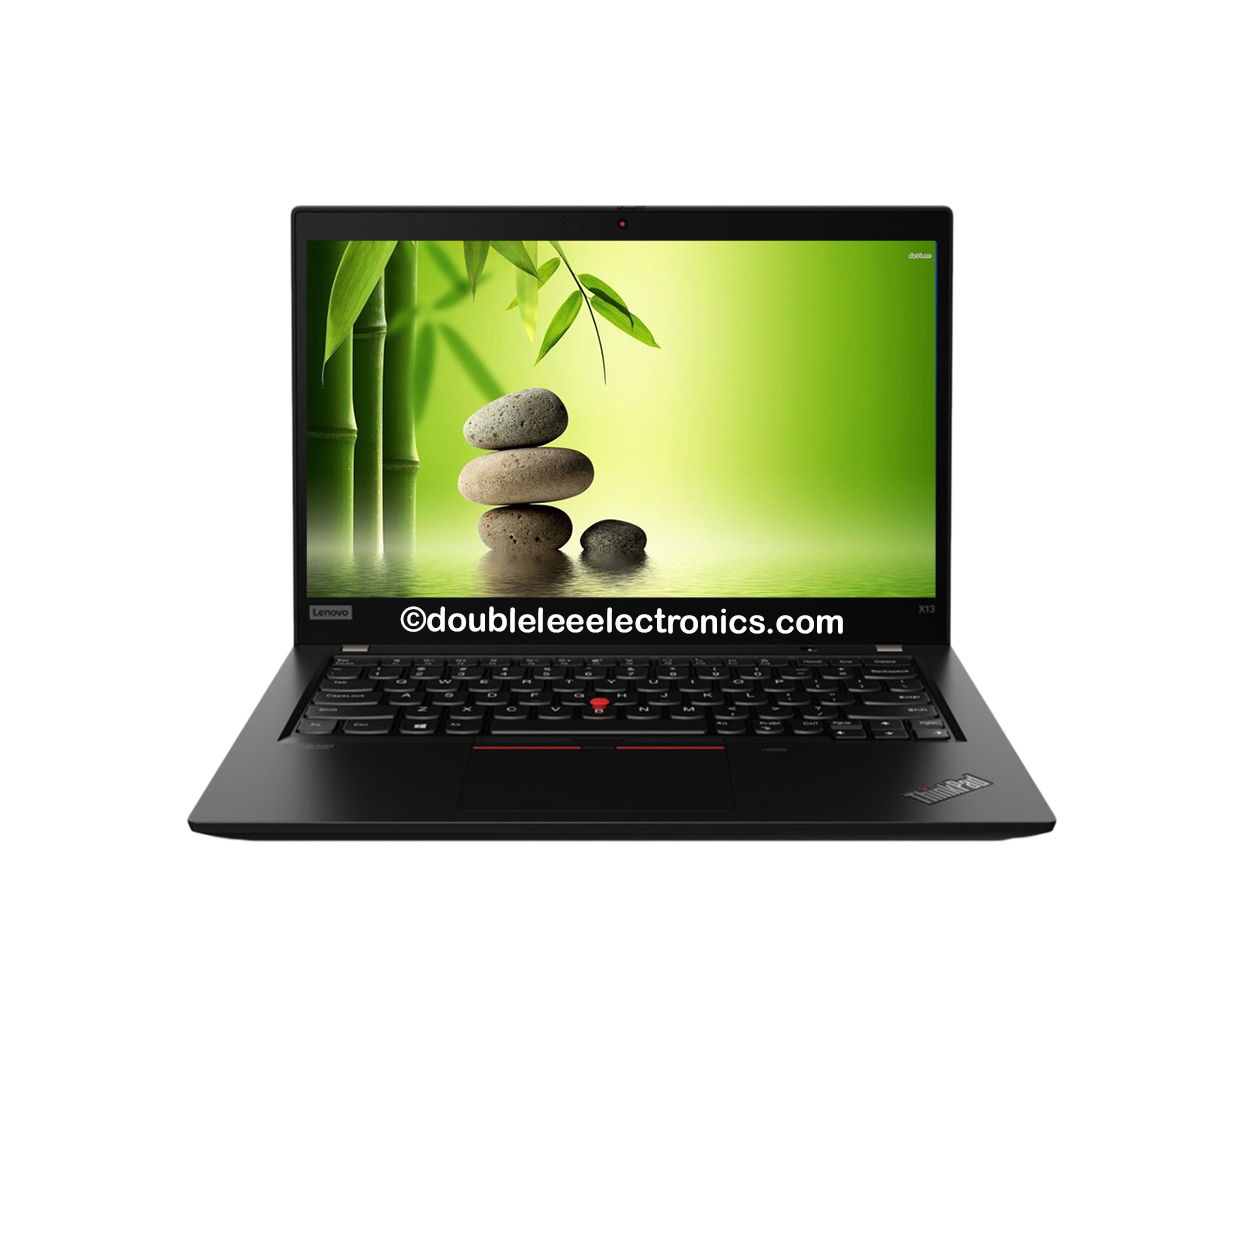 Lenovo ThinkPad X13 Gen Core i5 16GB/512GB Double Lee